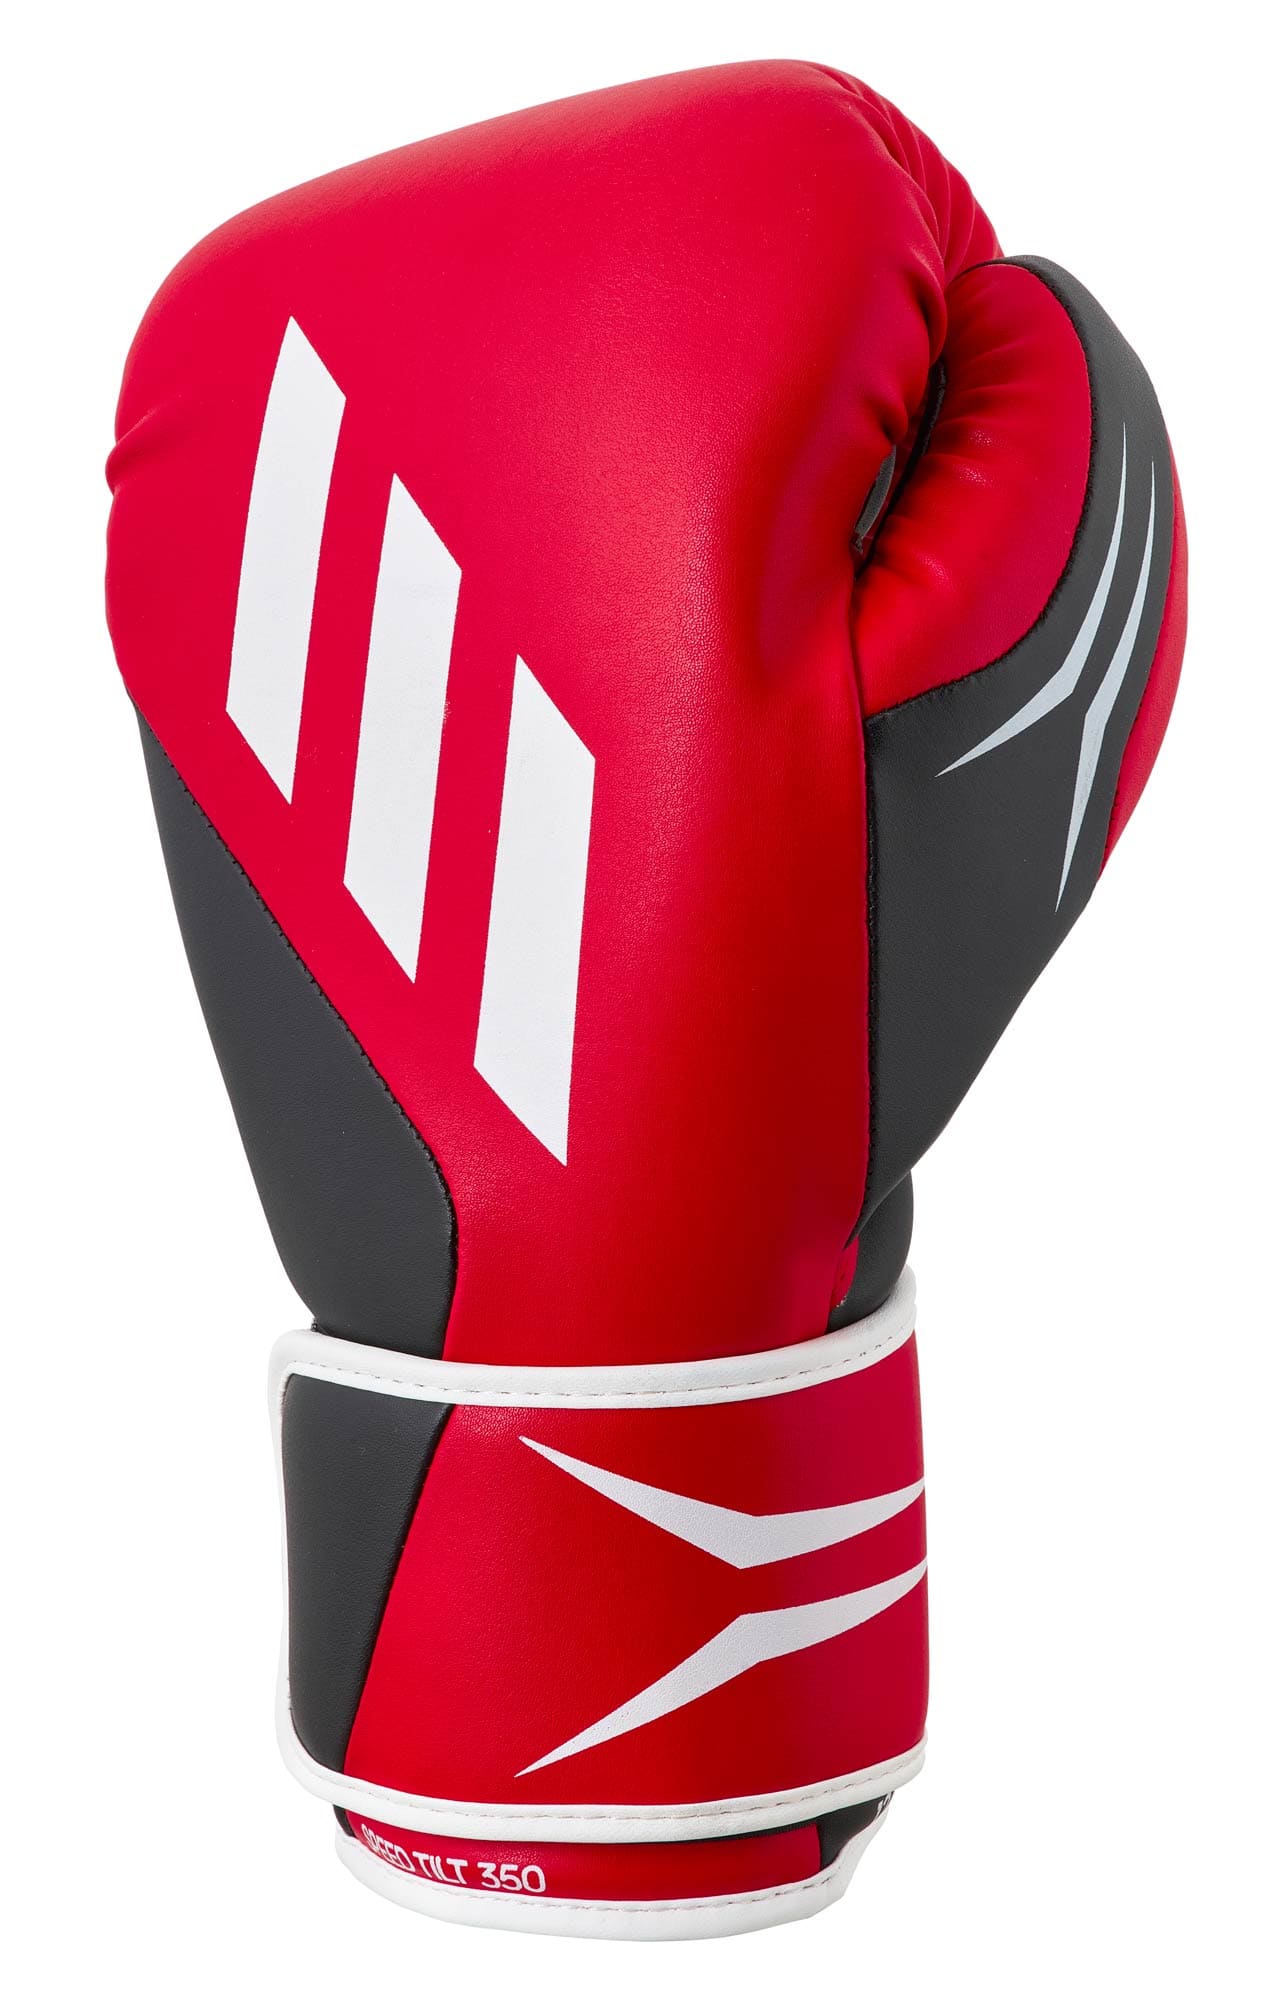 Buy ADIDAS Boxing Gloves SPEED TILT 350V Pro Red/Black Online ✓ - emparor  Fight Shop